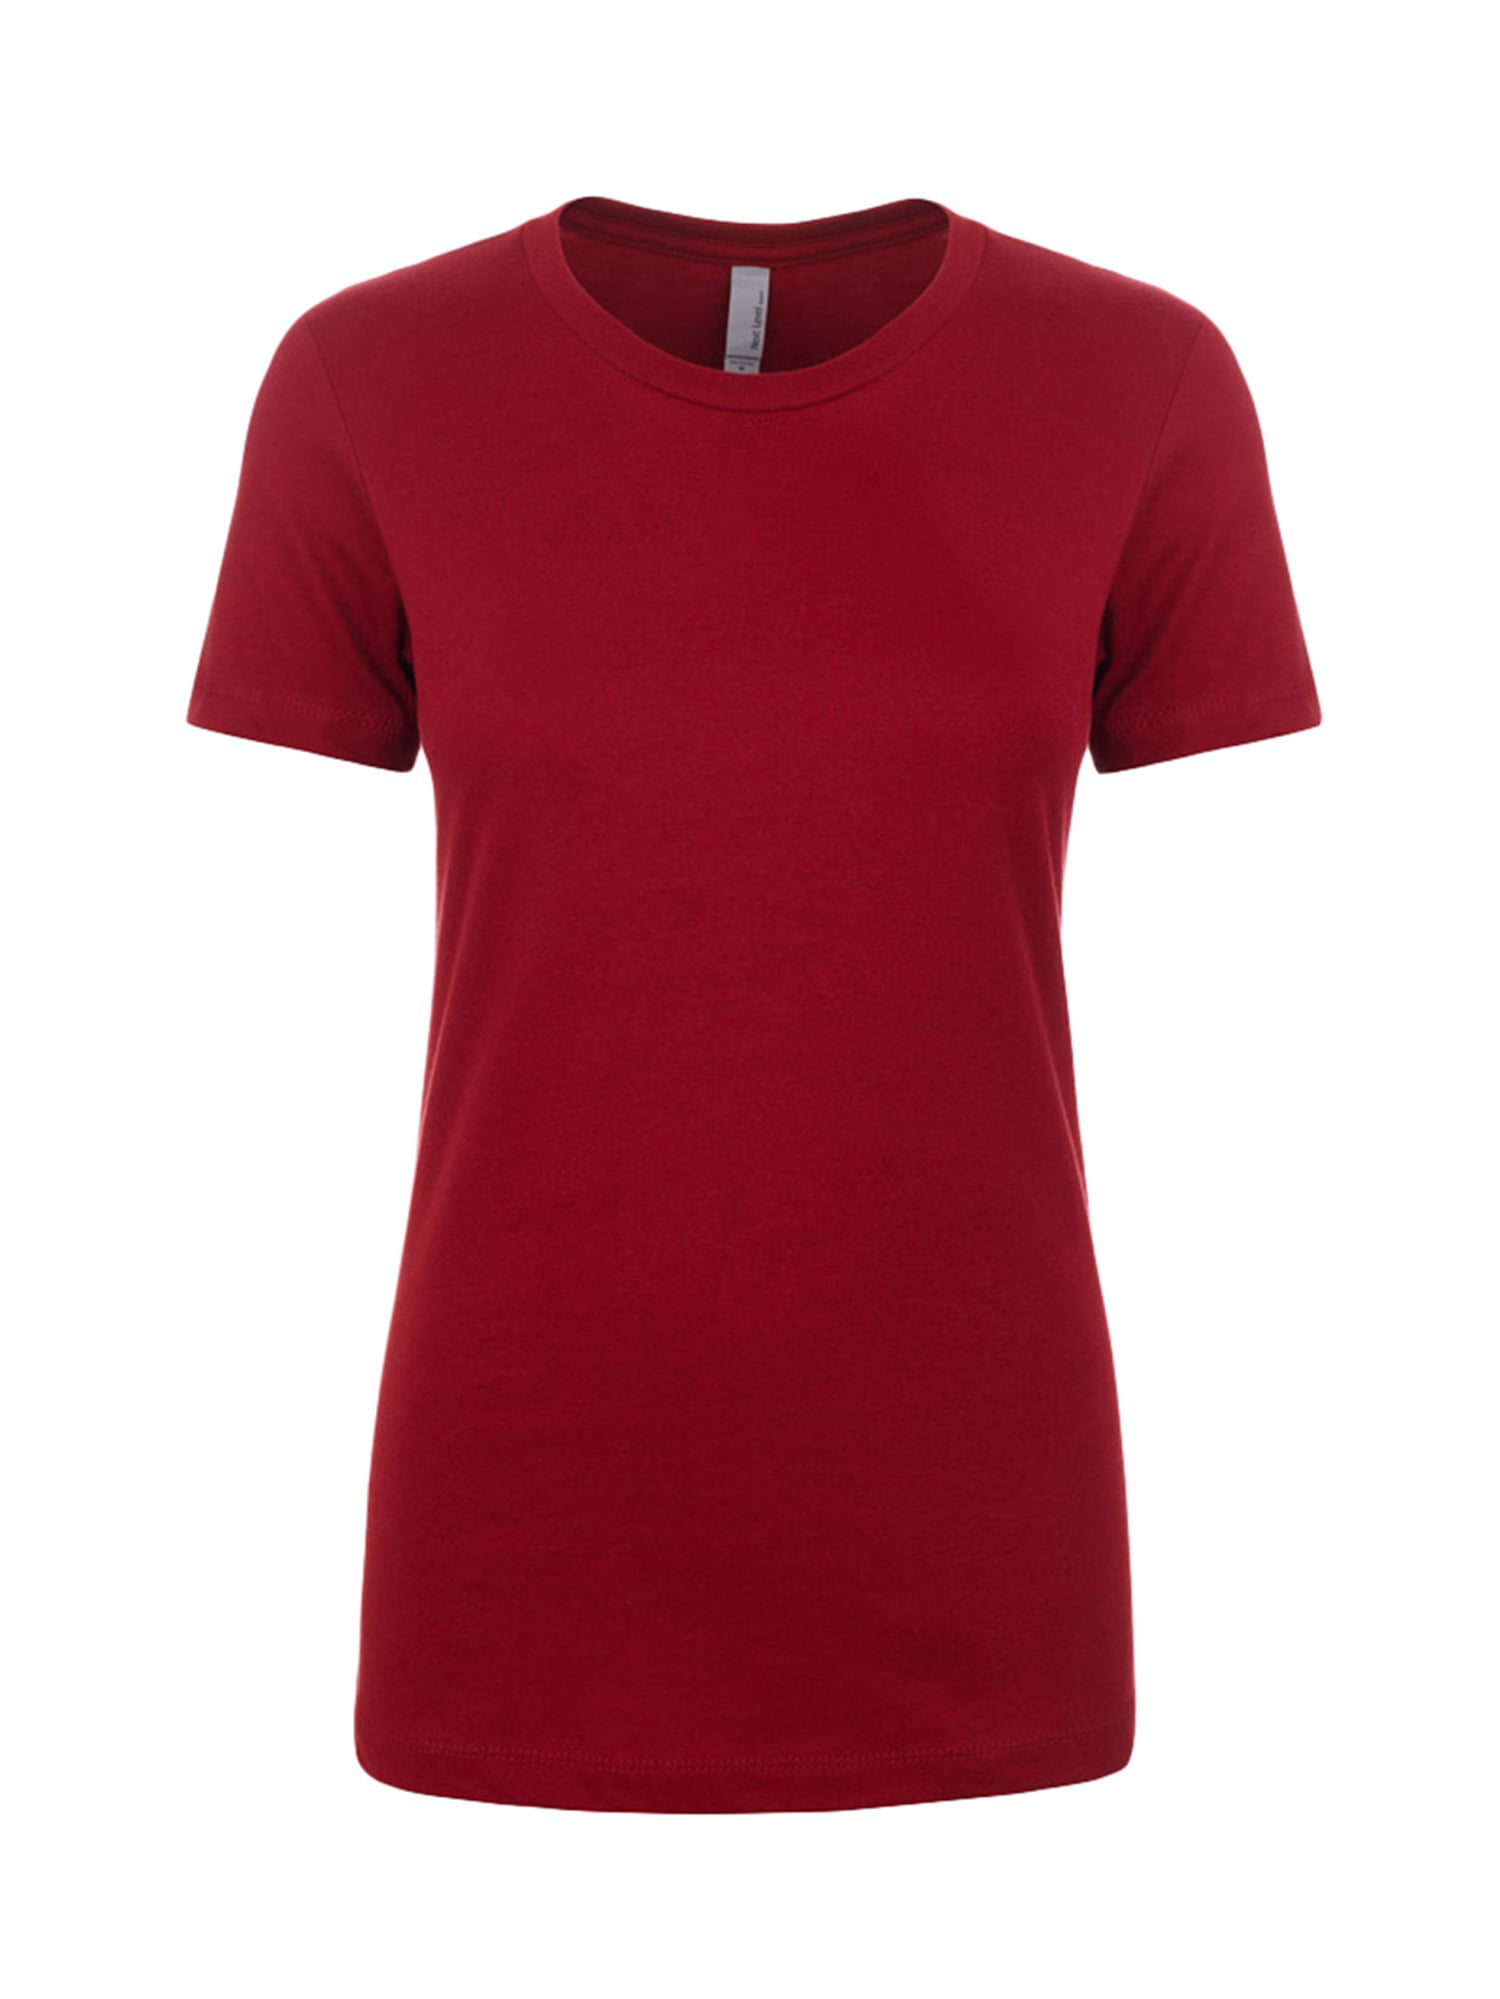 Next Level Women's 1x1 Rib Collar Tear Away label Jersey T-Shirt, Style ...